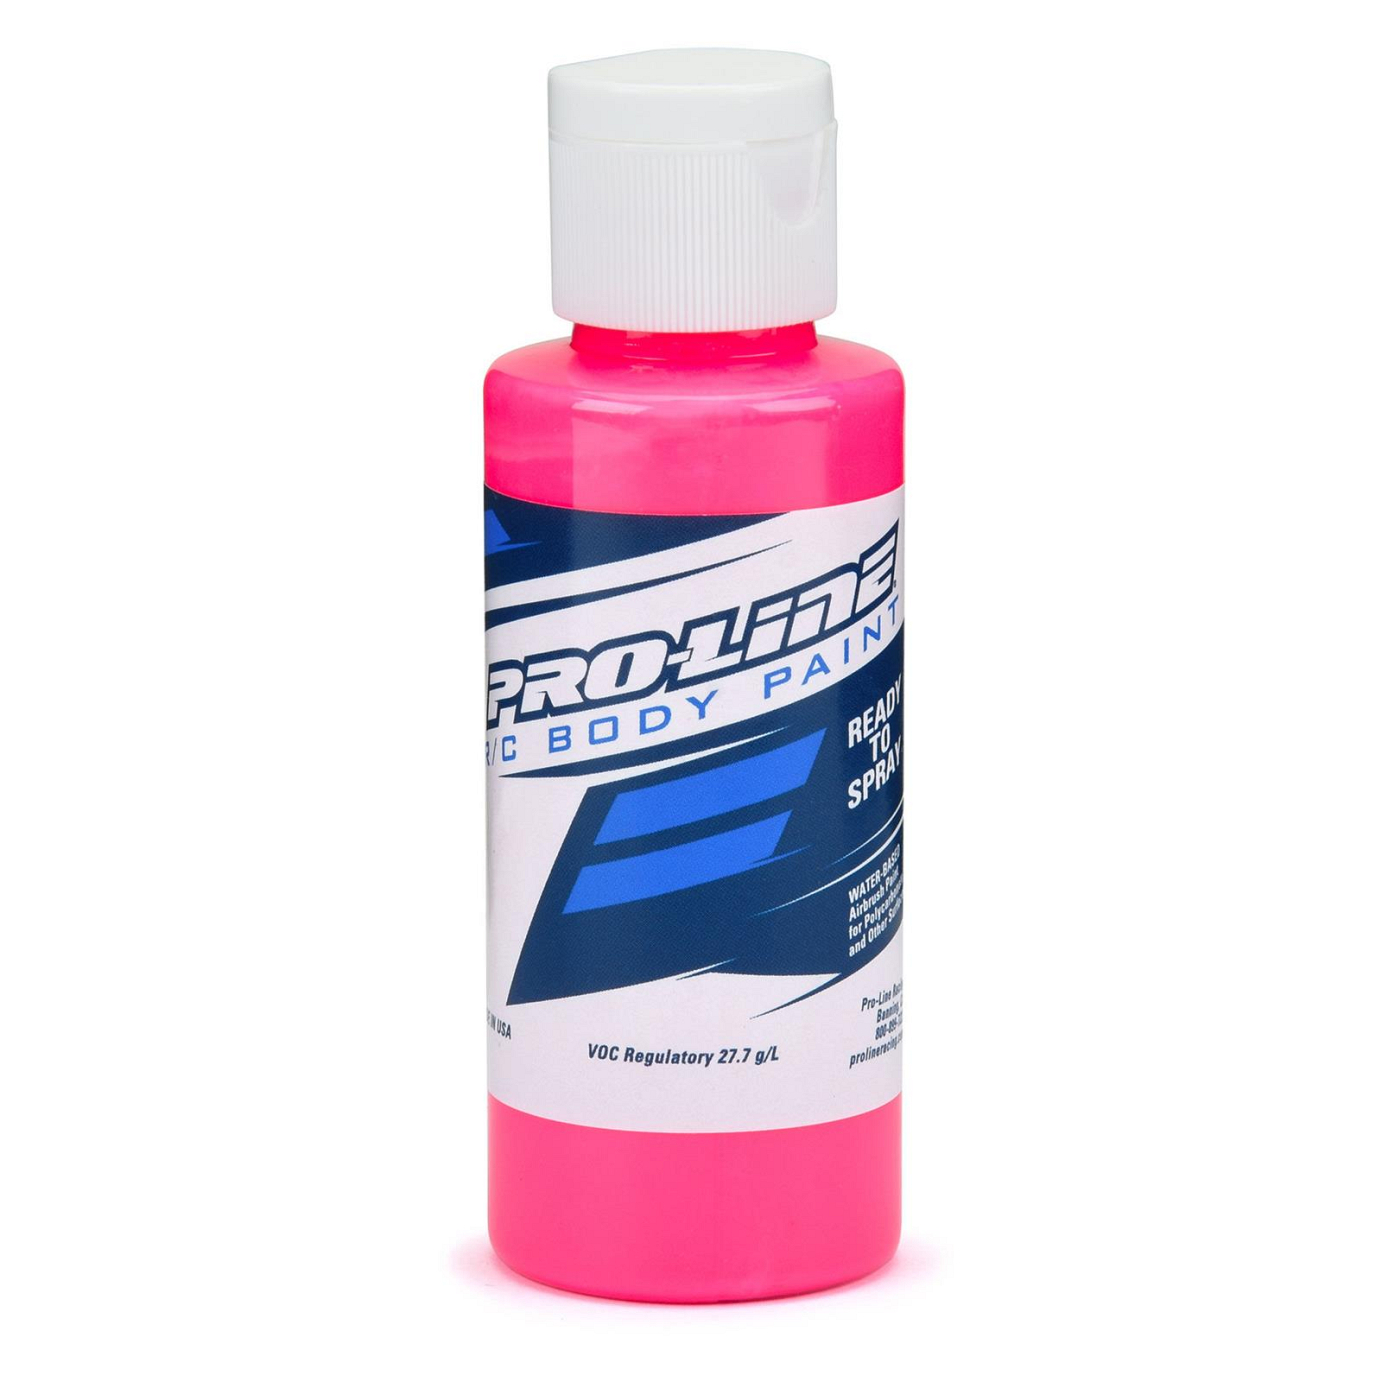 Proline RC Body Paint, Fluorescent Pink